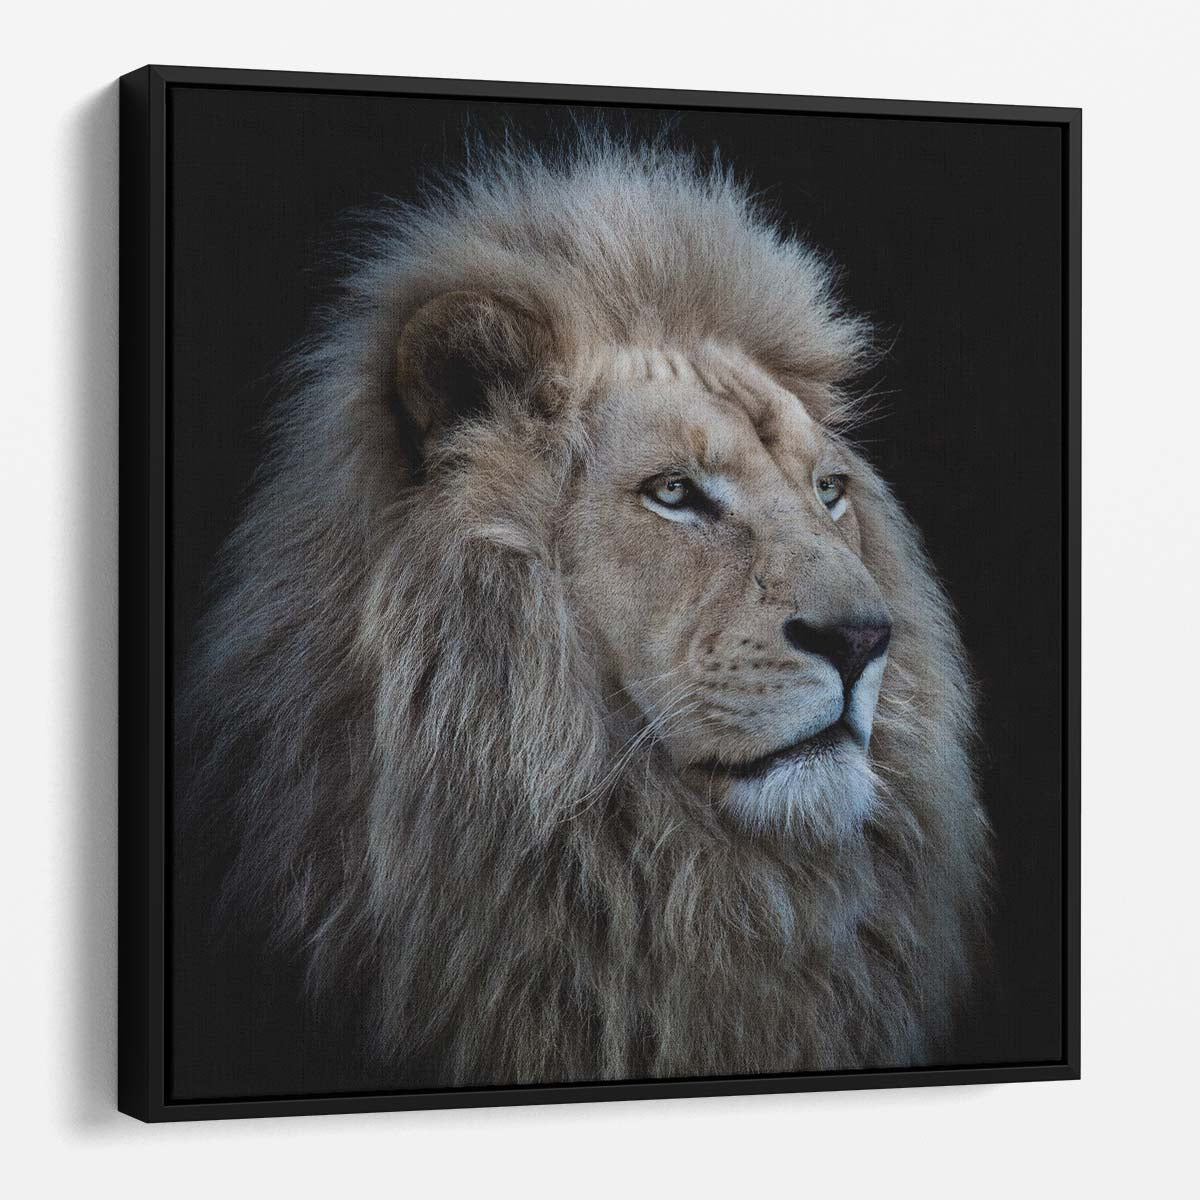 Majestic Dark Timbavati White Lion Portrait Wall Art by Luxuriance Designs. Made in USA.